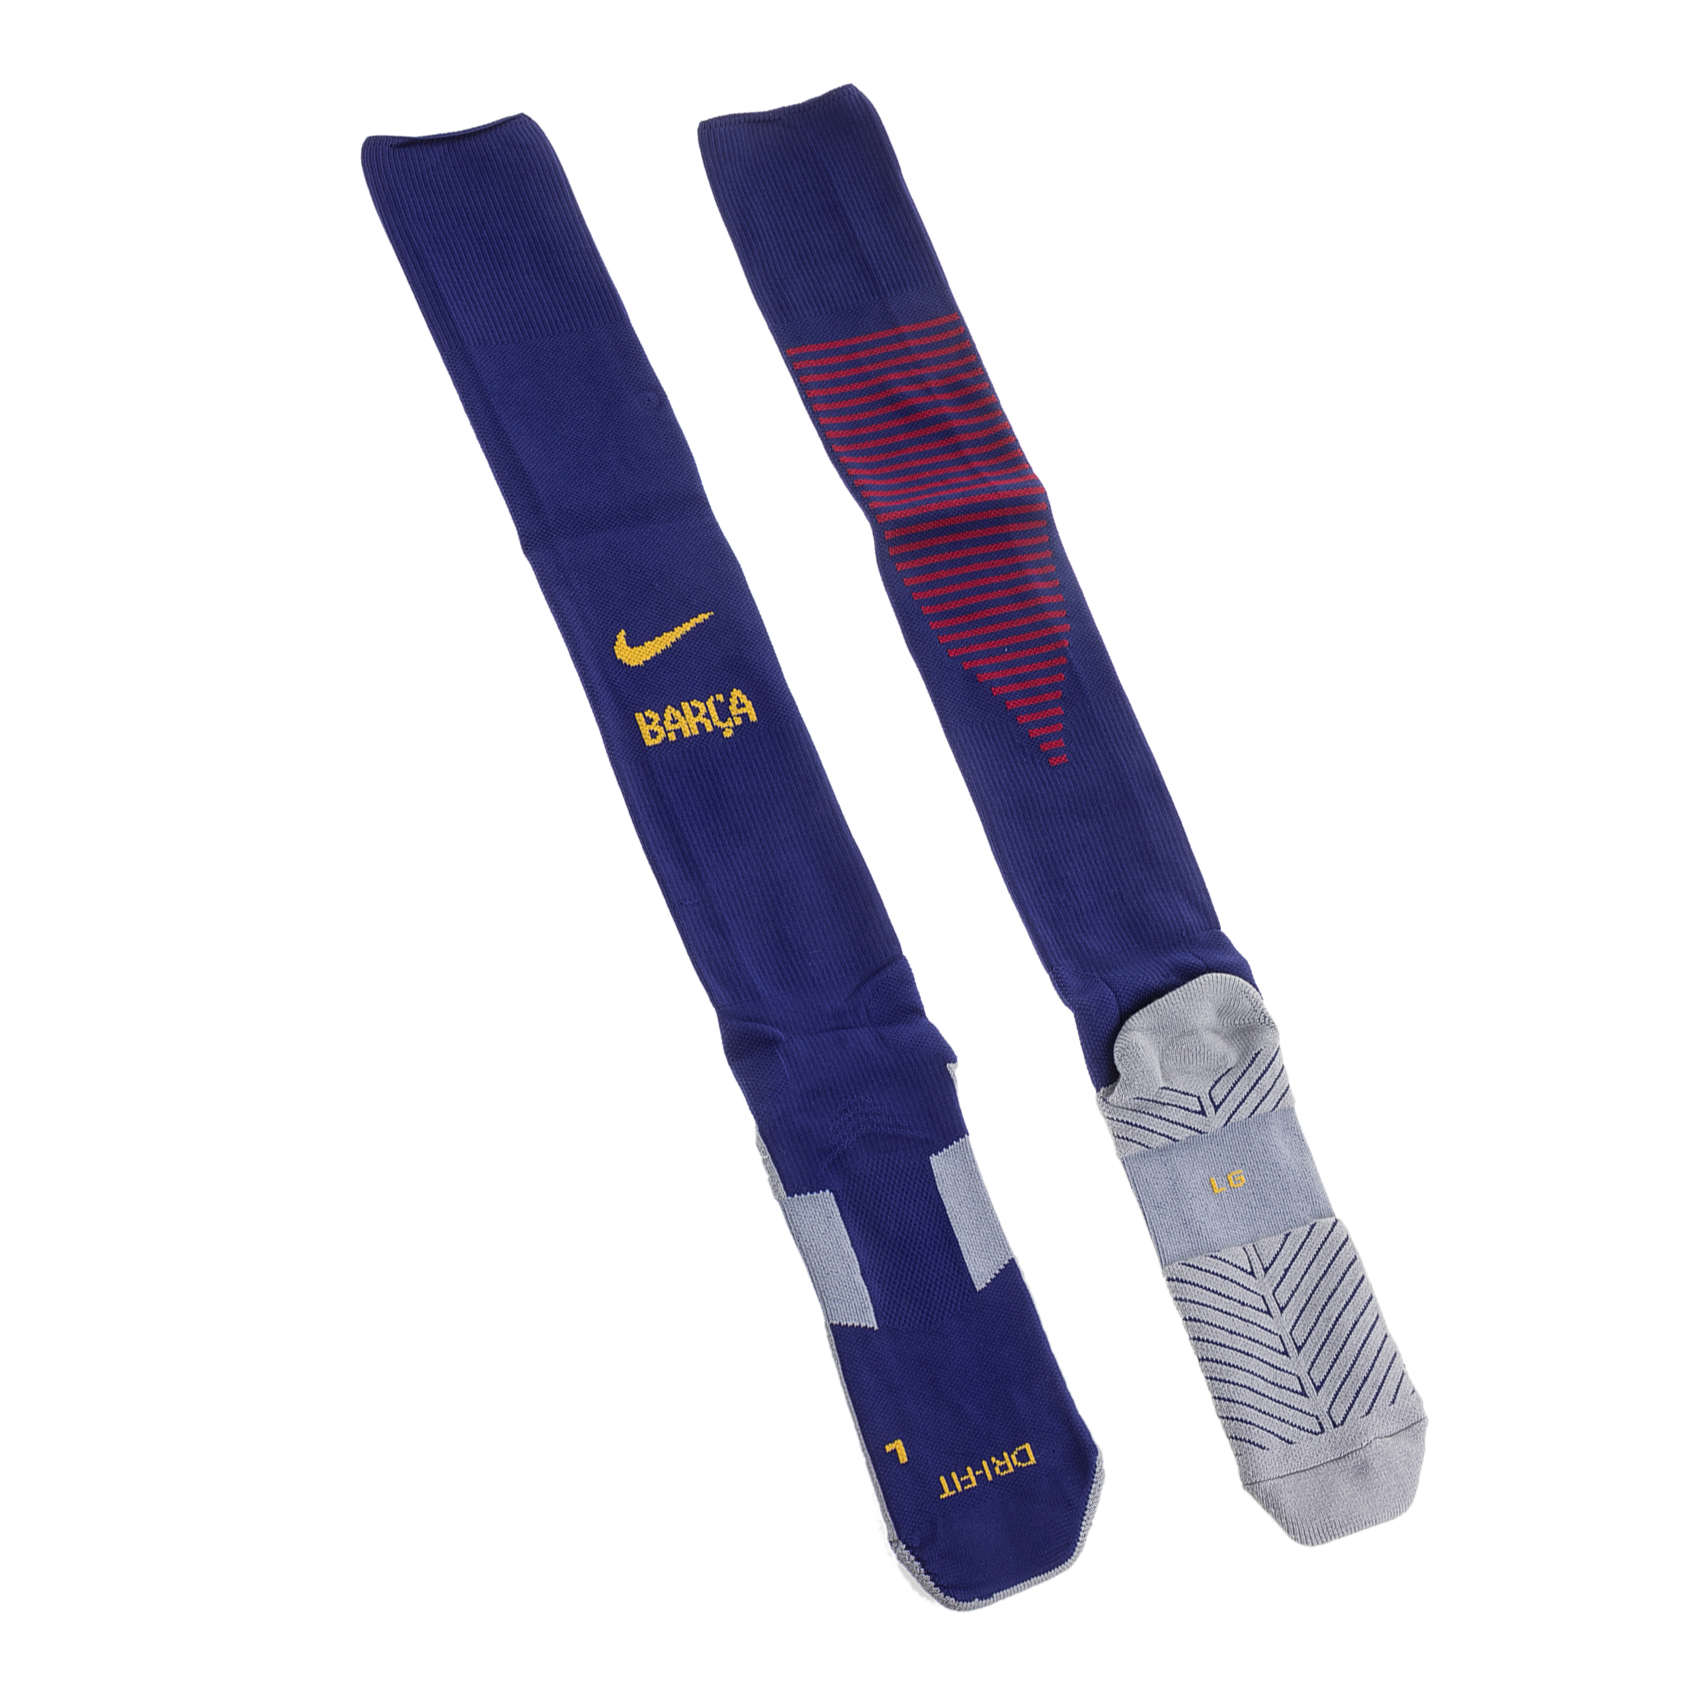 NIKE - Unisex κάλτσες Nike BARCELONA μπλε